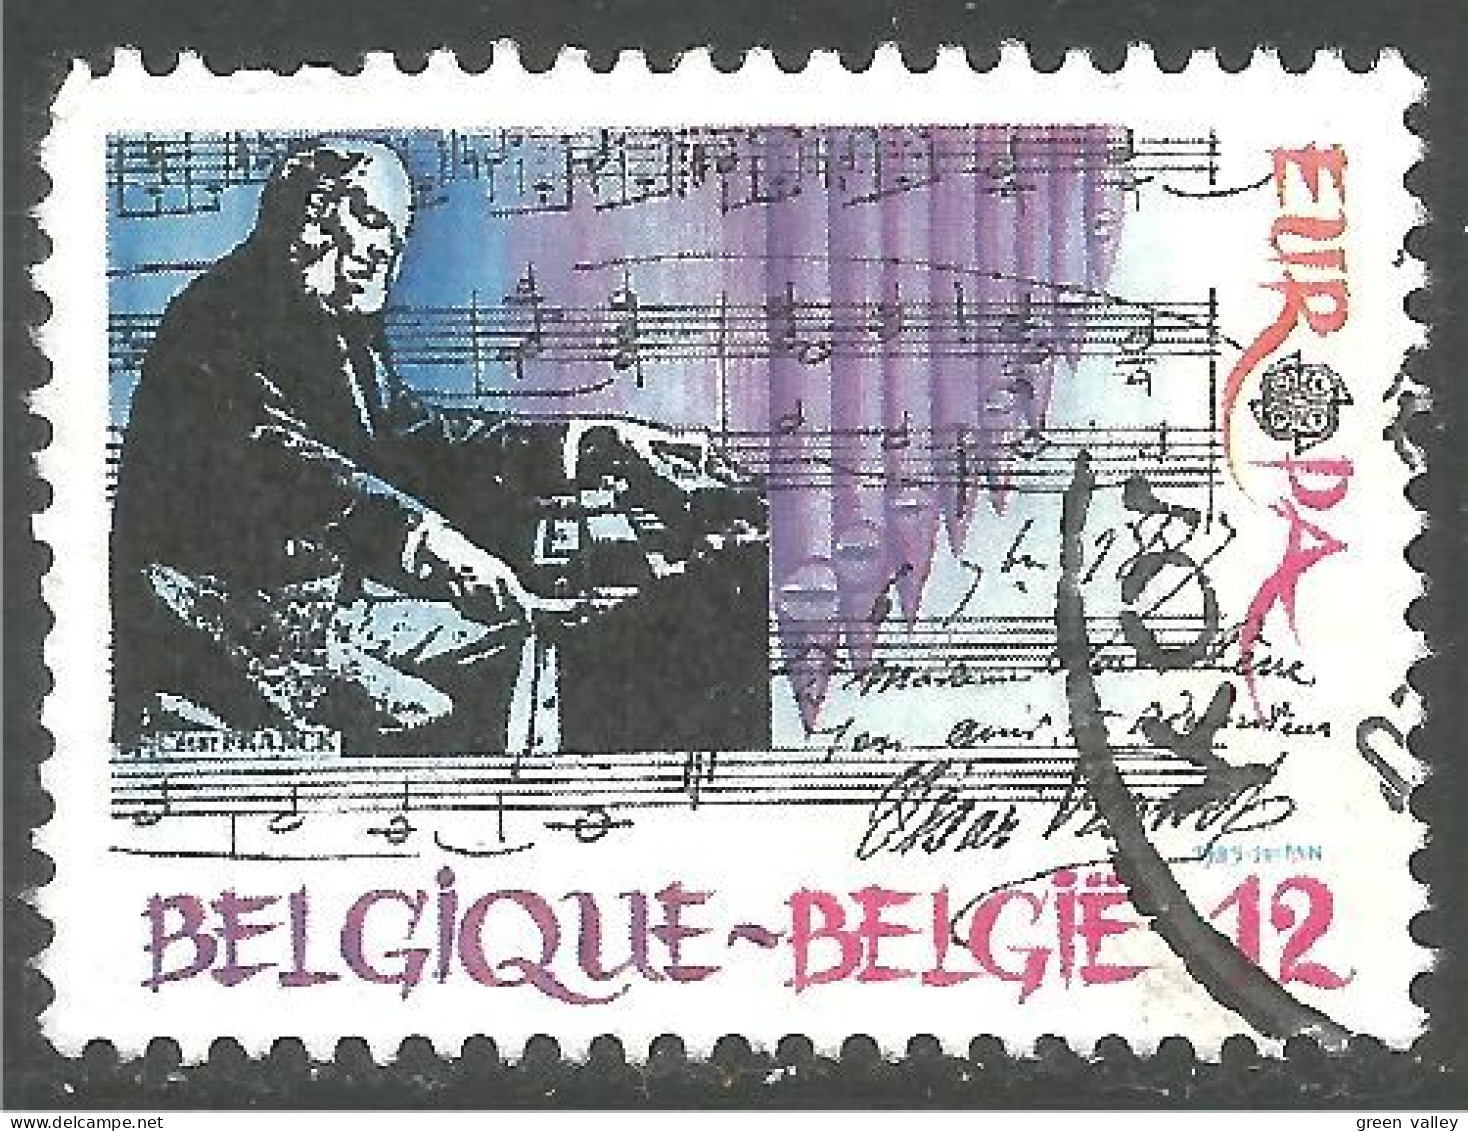 EU85-52a EUROPA CEPT 1985 Belgique Piano Hymne National Anthem Partition Music Sheet - Musica